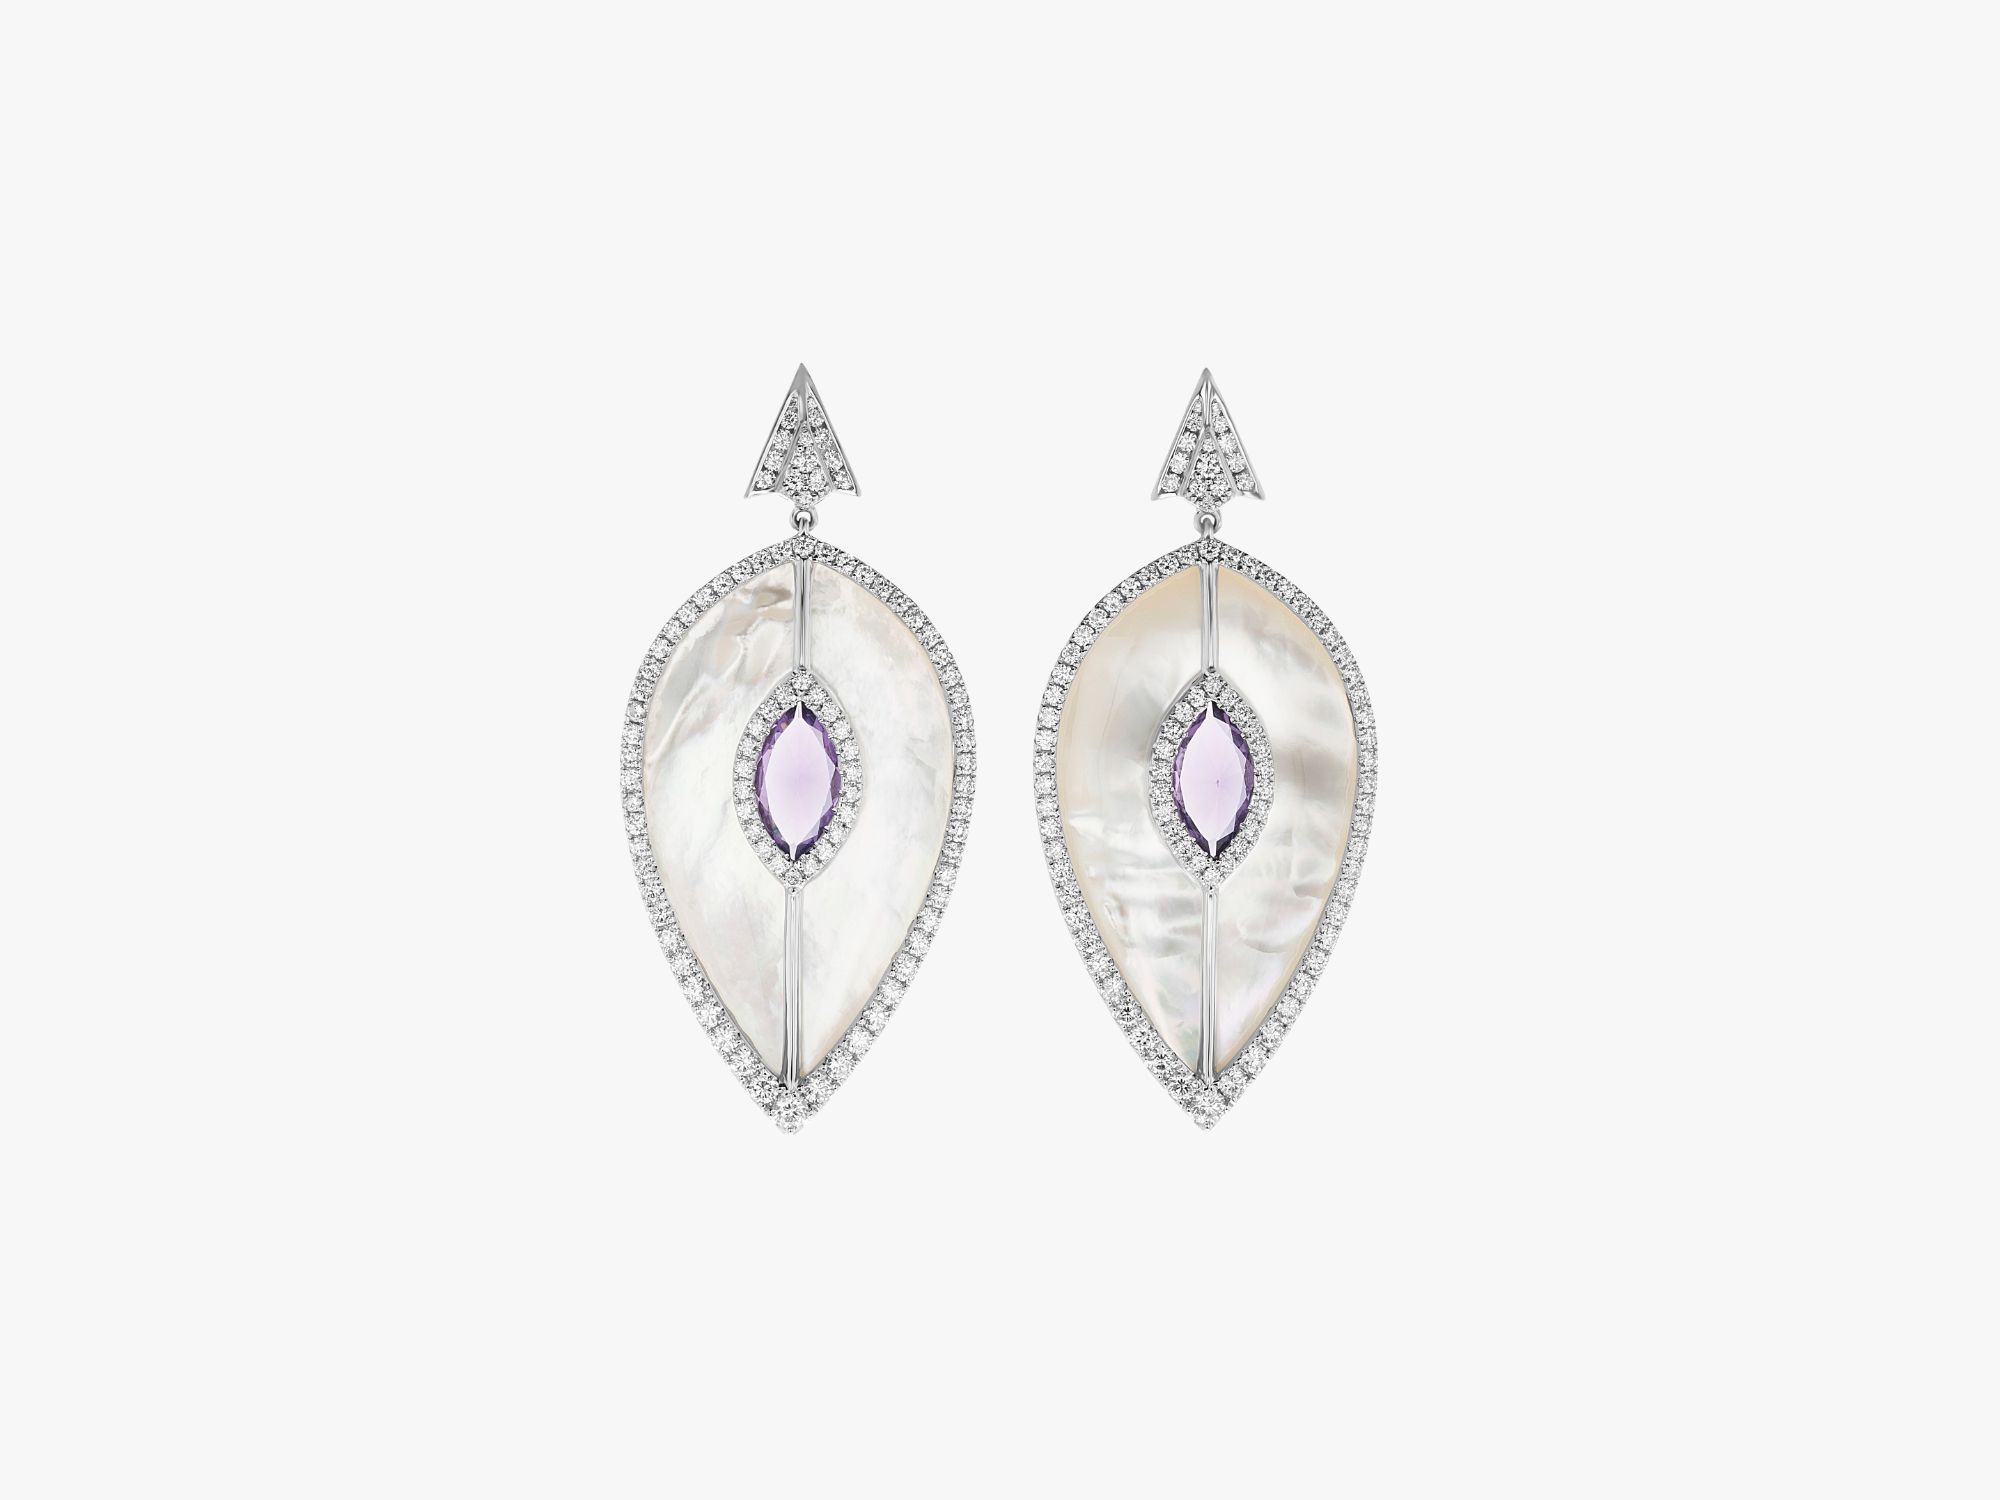 Pearl & Amethyst Earrings